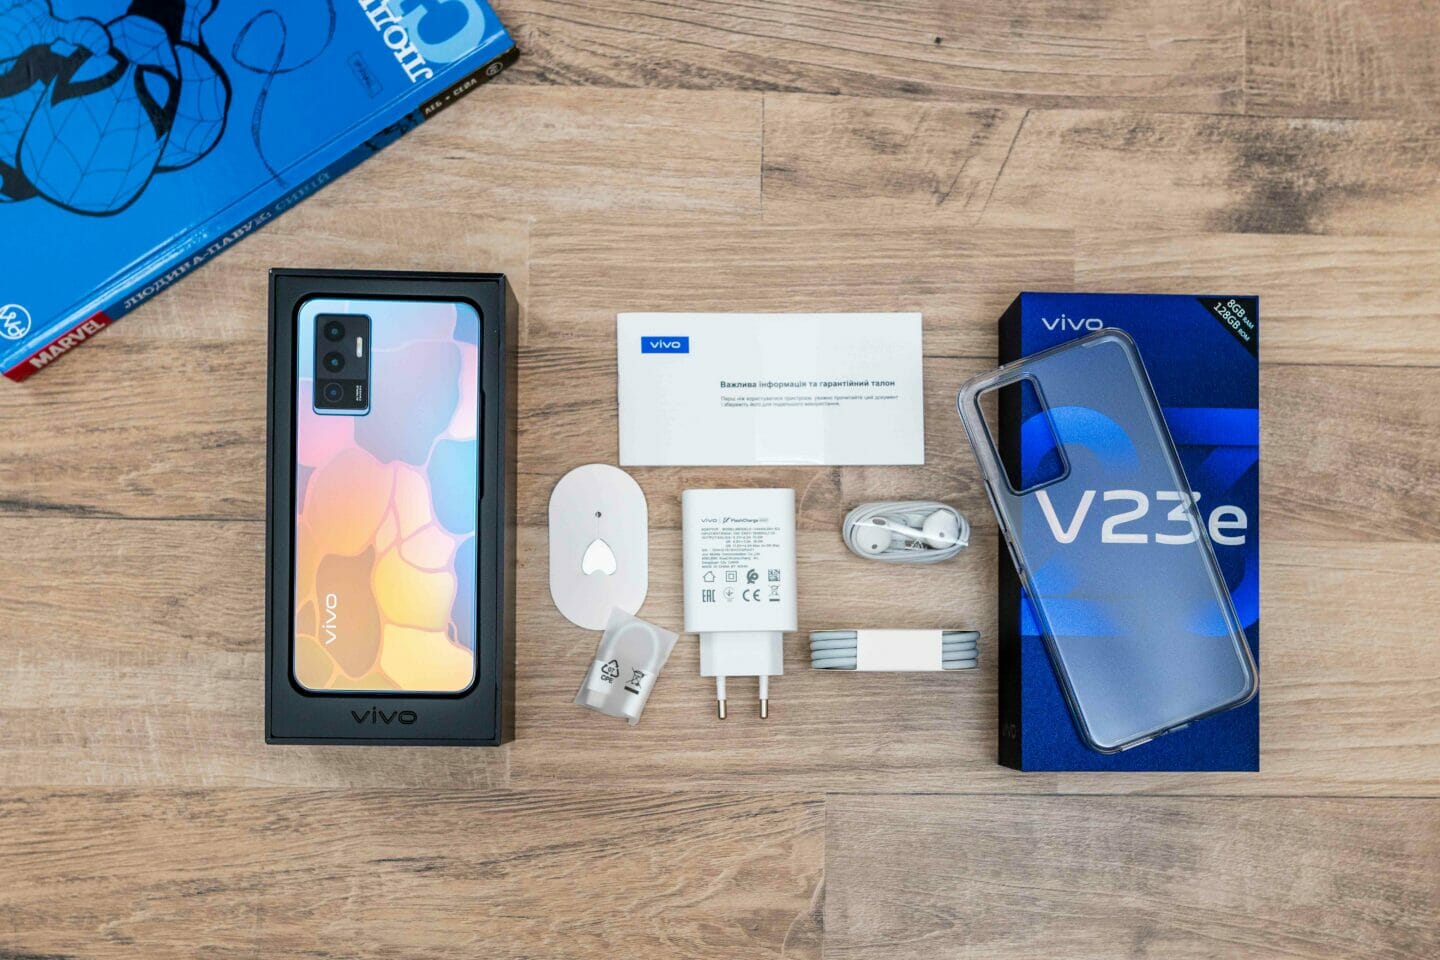 Vivo V23e review: a smartphone with an interesting design and a powerful selfie camera